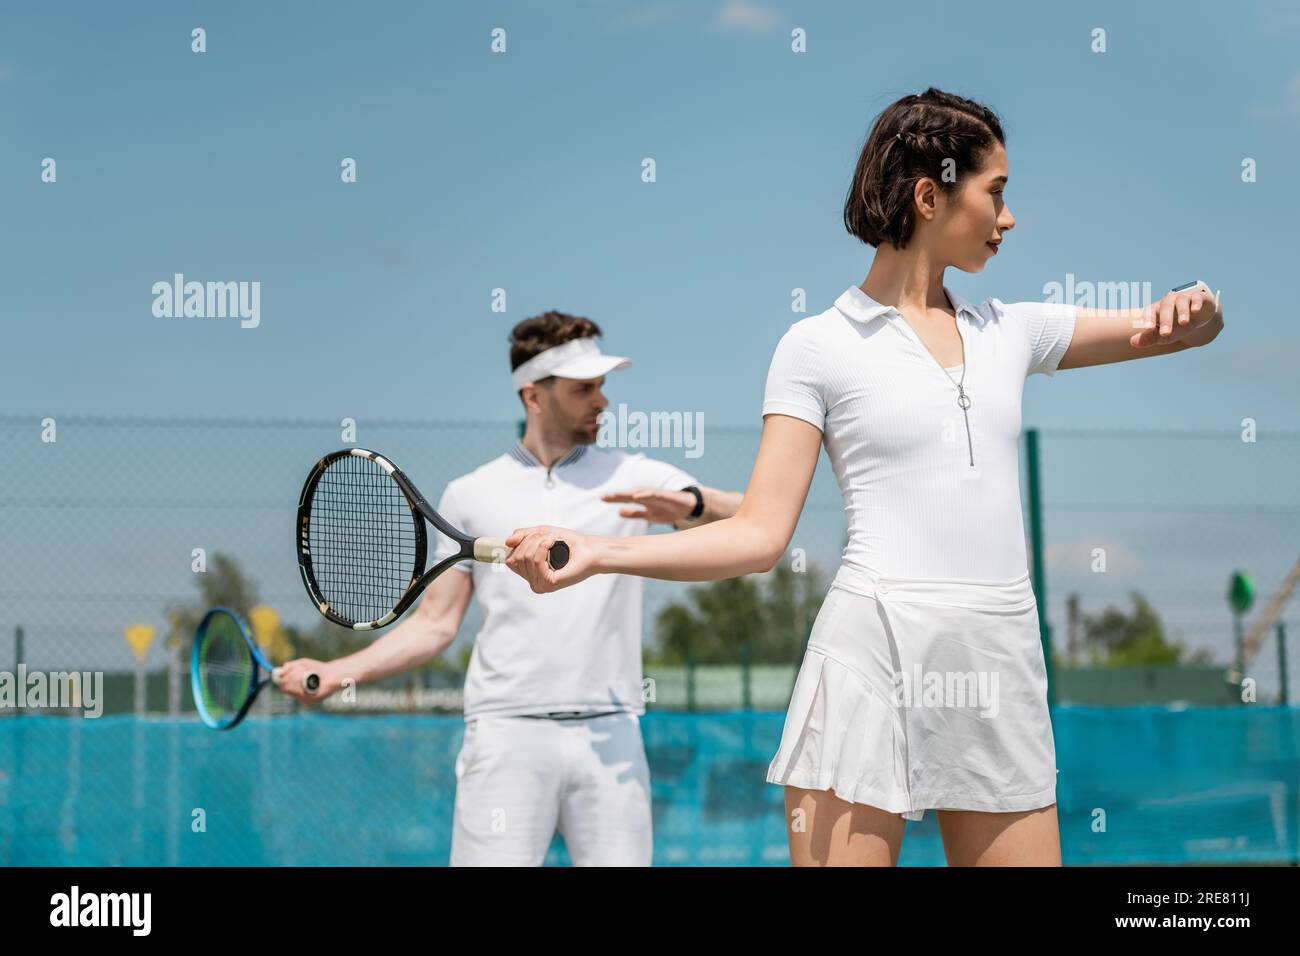 woman in tennis skirt holding racket near boyfriend on court, summer sport, couple, leisure Stock Photo